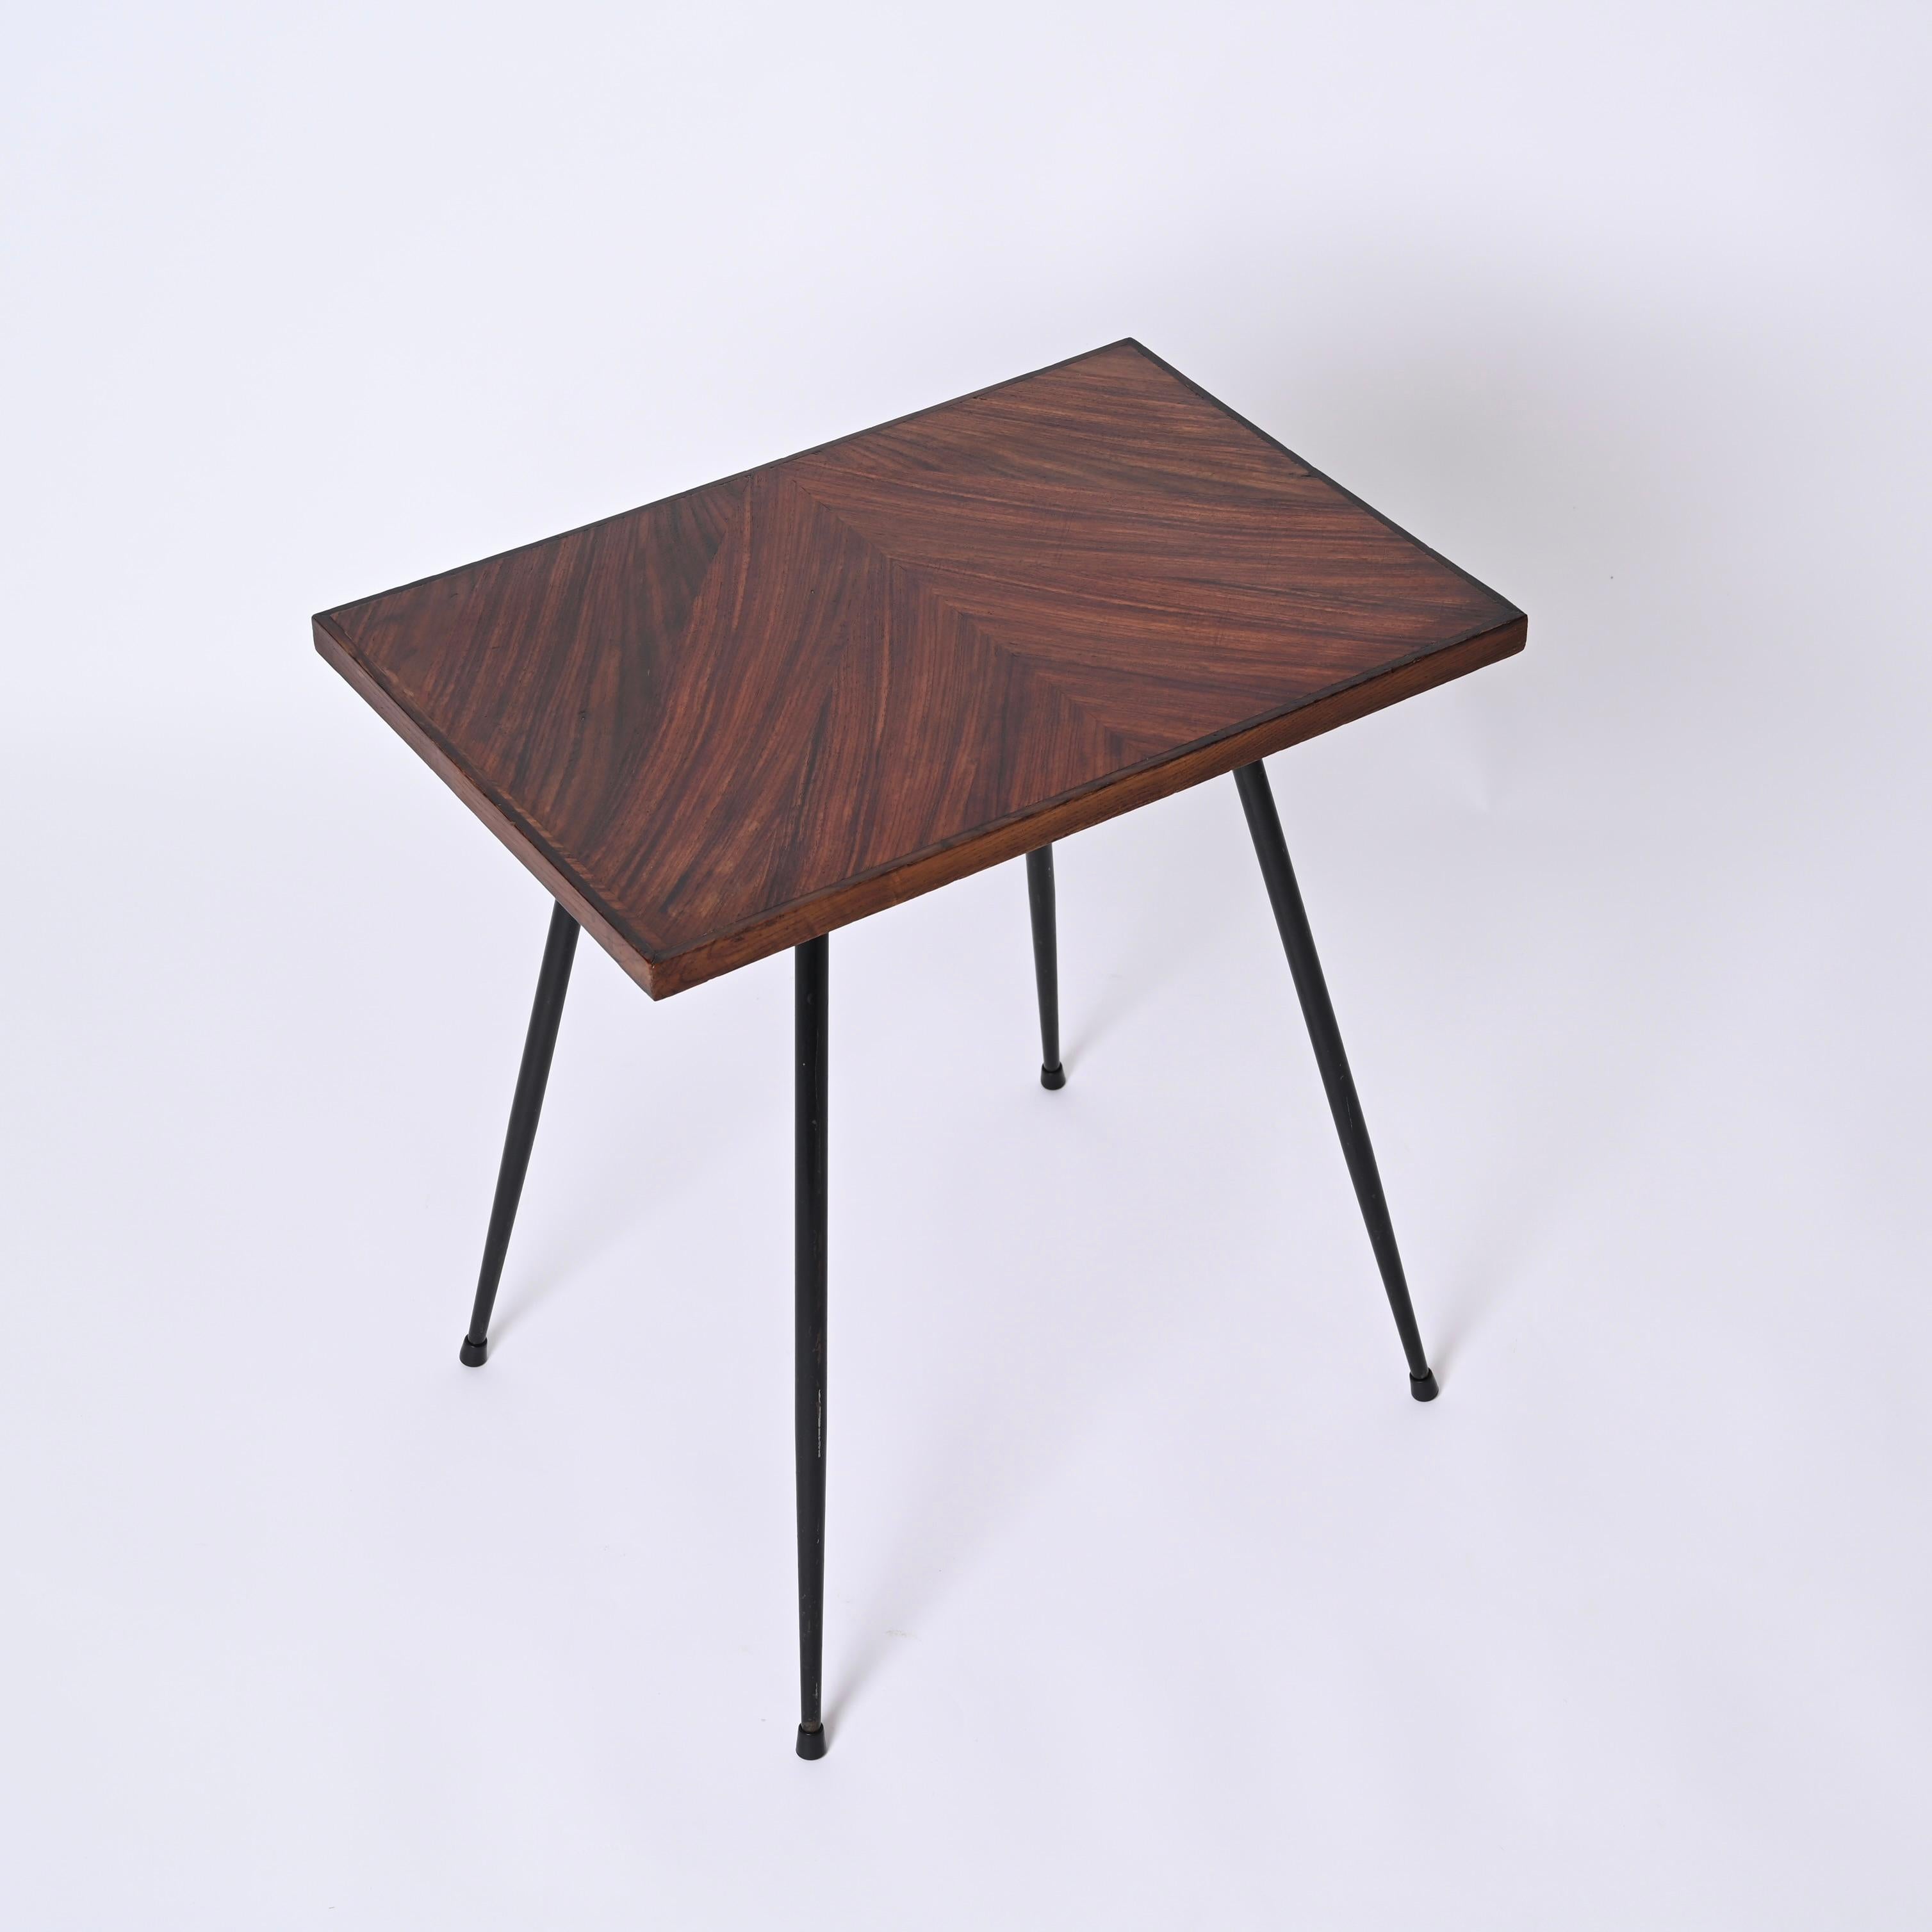 Italian Midcentury Rectangular Side Table in Teak Wood and Enameled Metal, 1950s For Sale 3